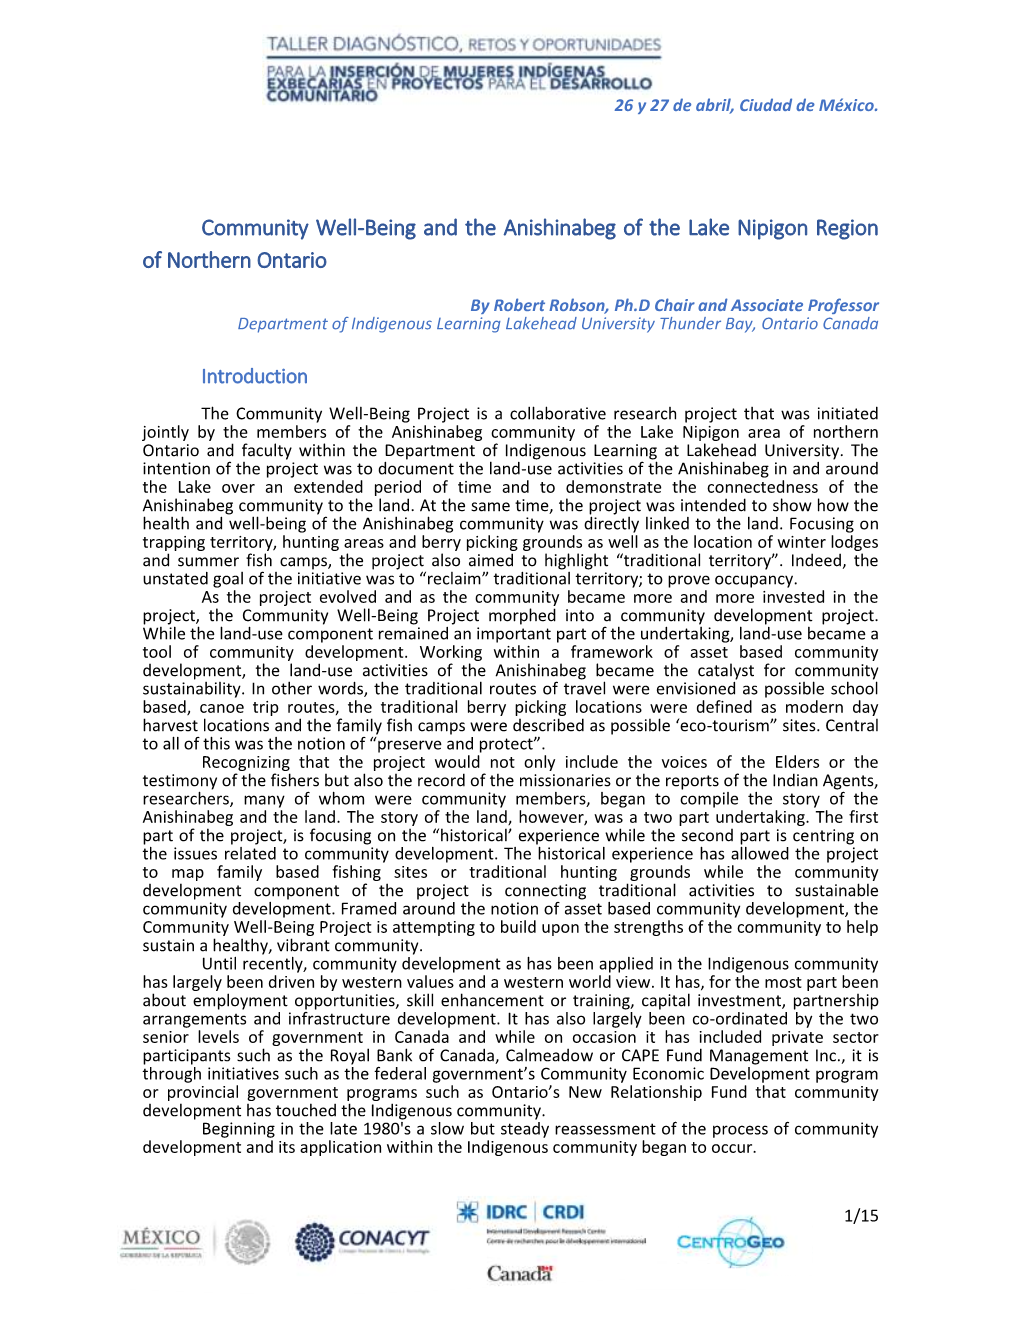 Community Well-Being and the Anishinabeg of the Lake Nipigon Region of Northern Ontario